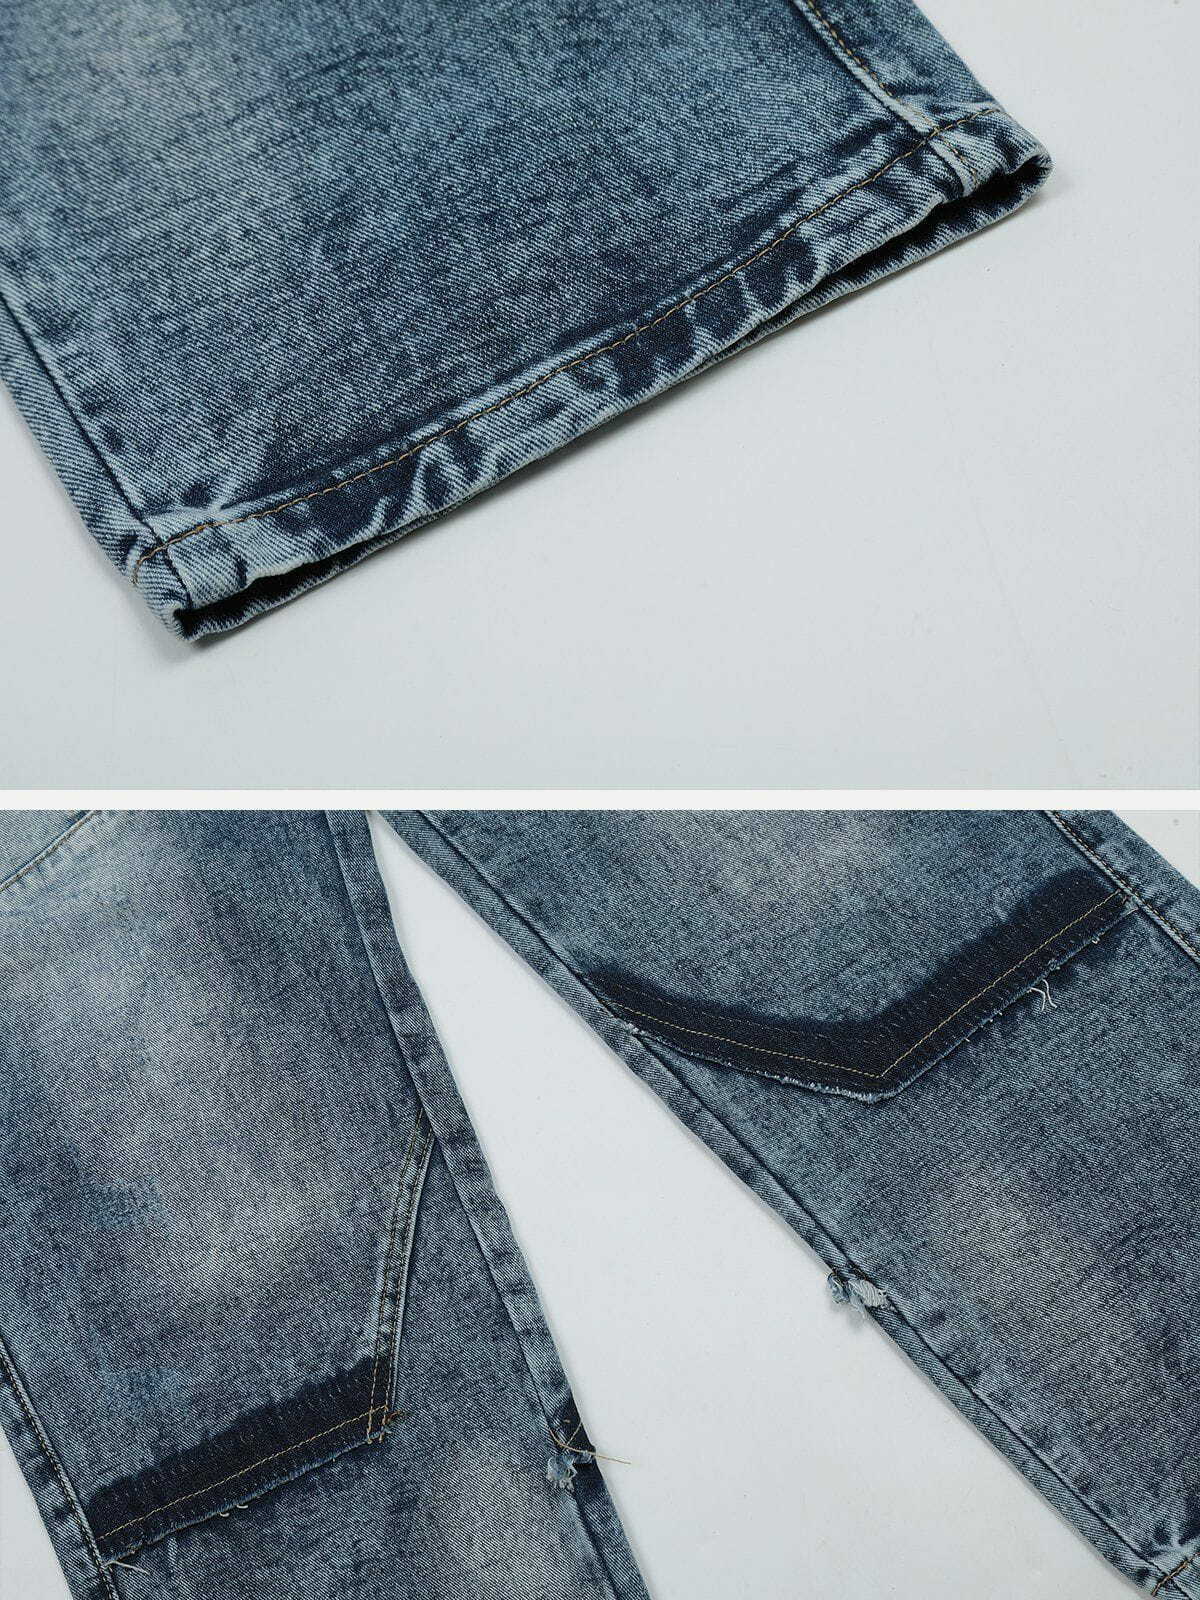 vibrant gradient jeans edgy & trendy streetwear 1133